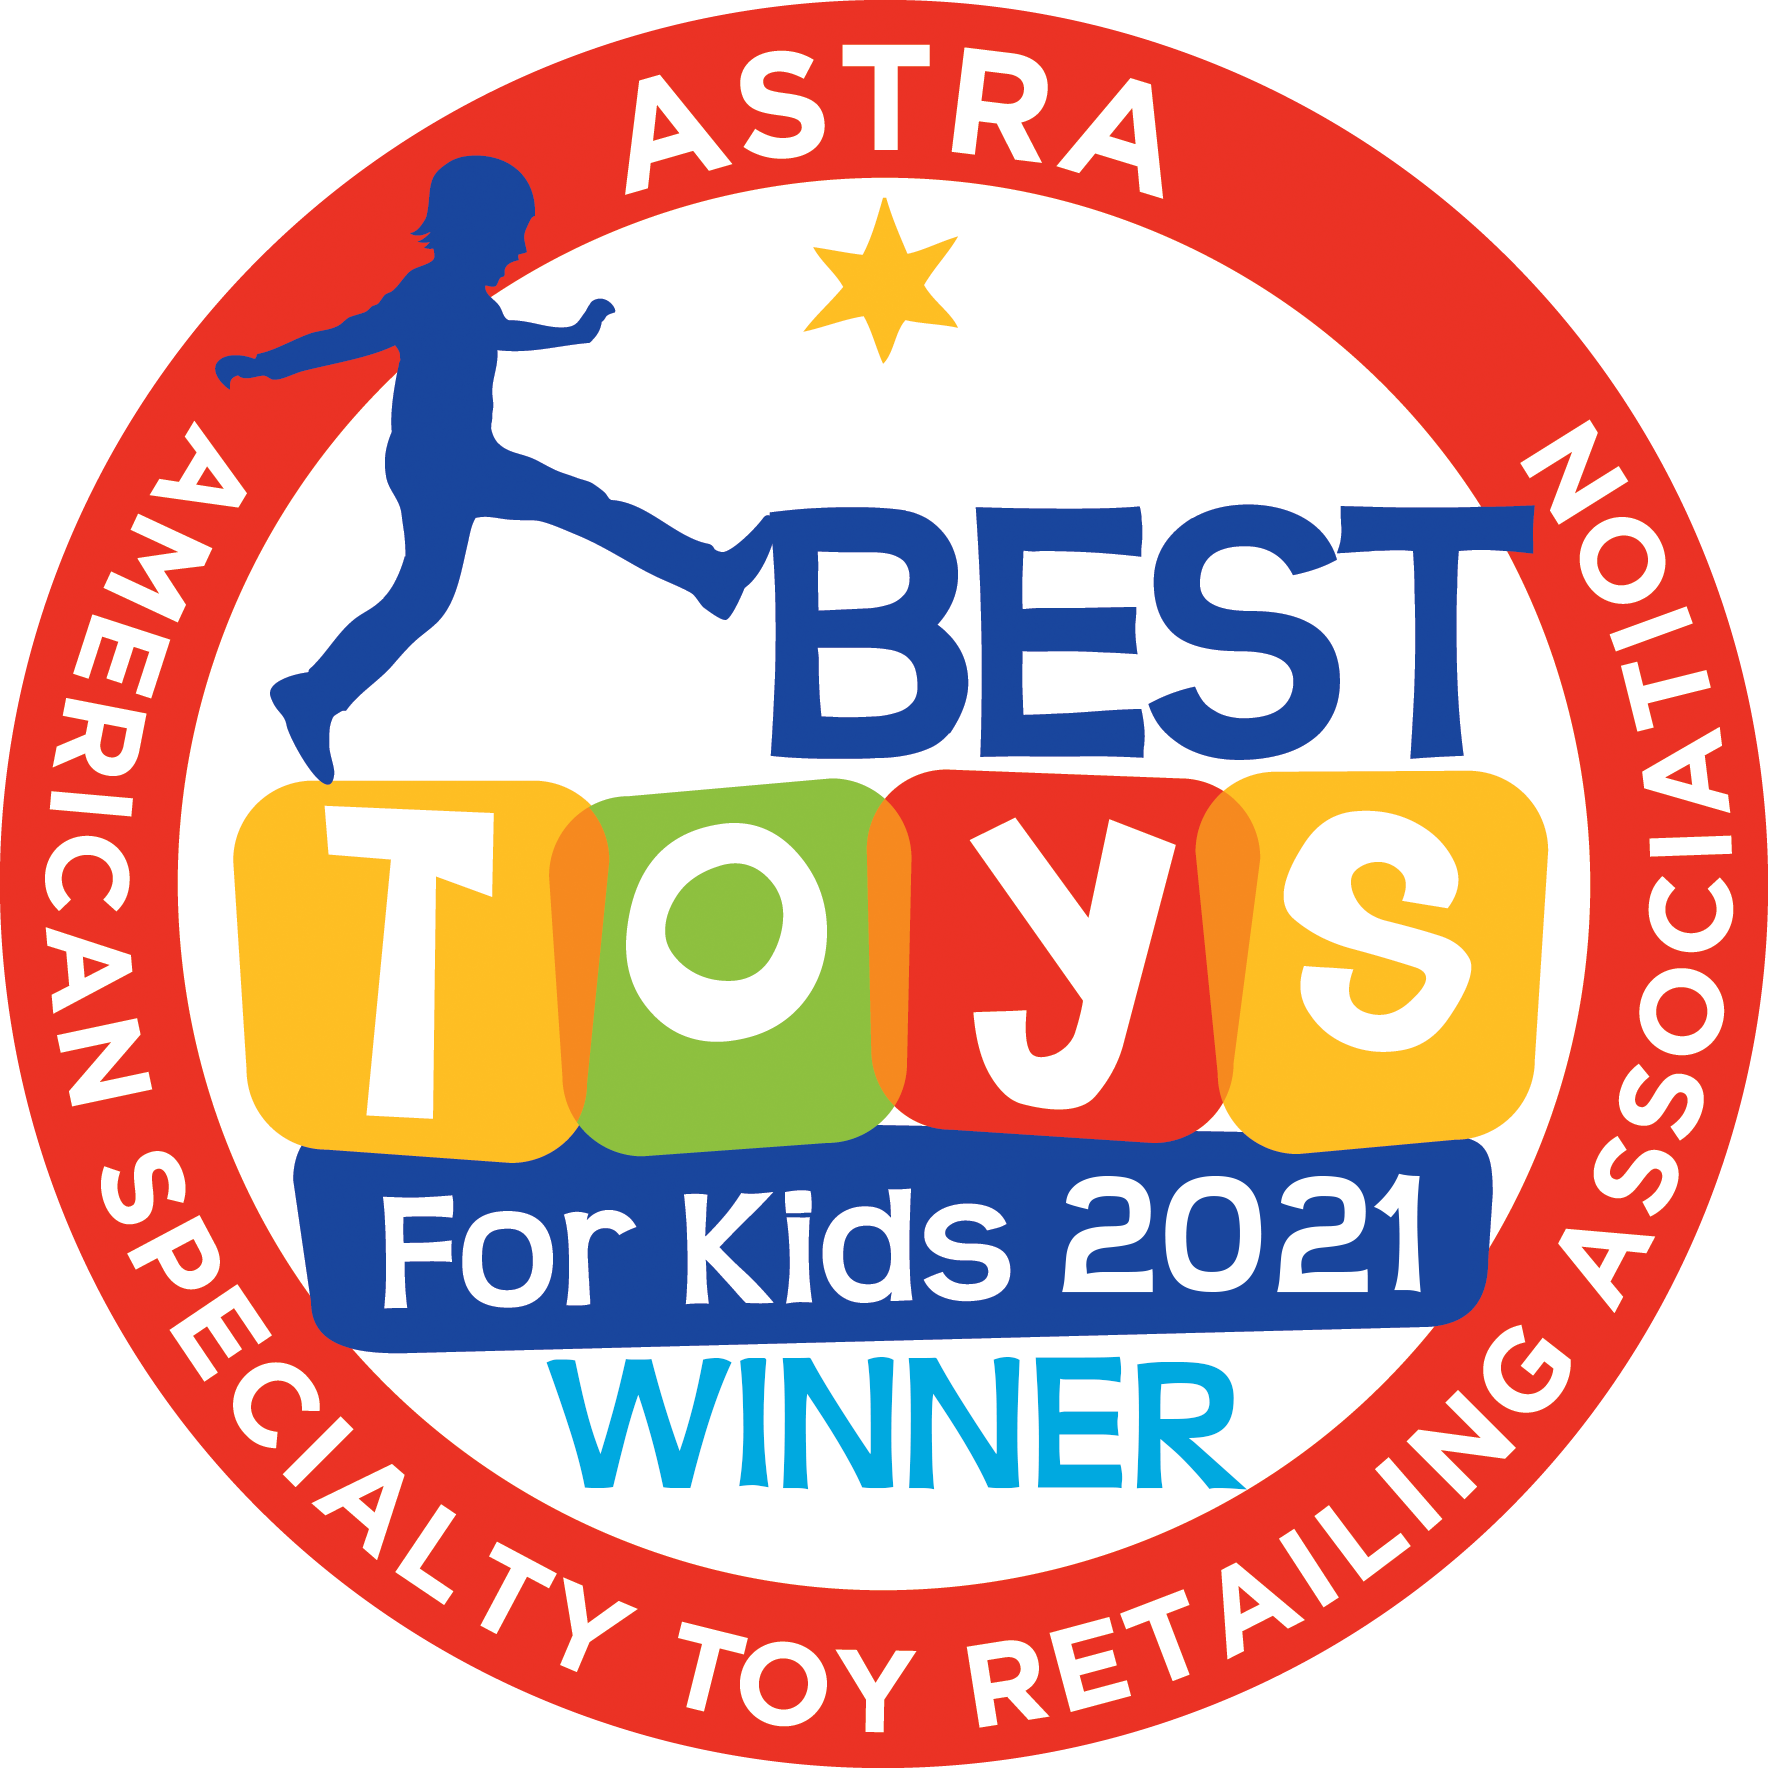 ASTRA Best Toys for Kids Award